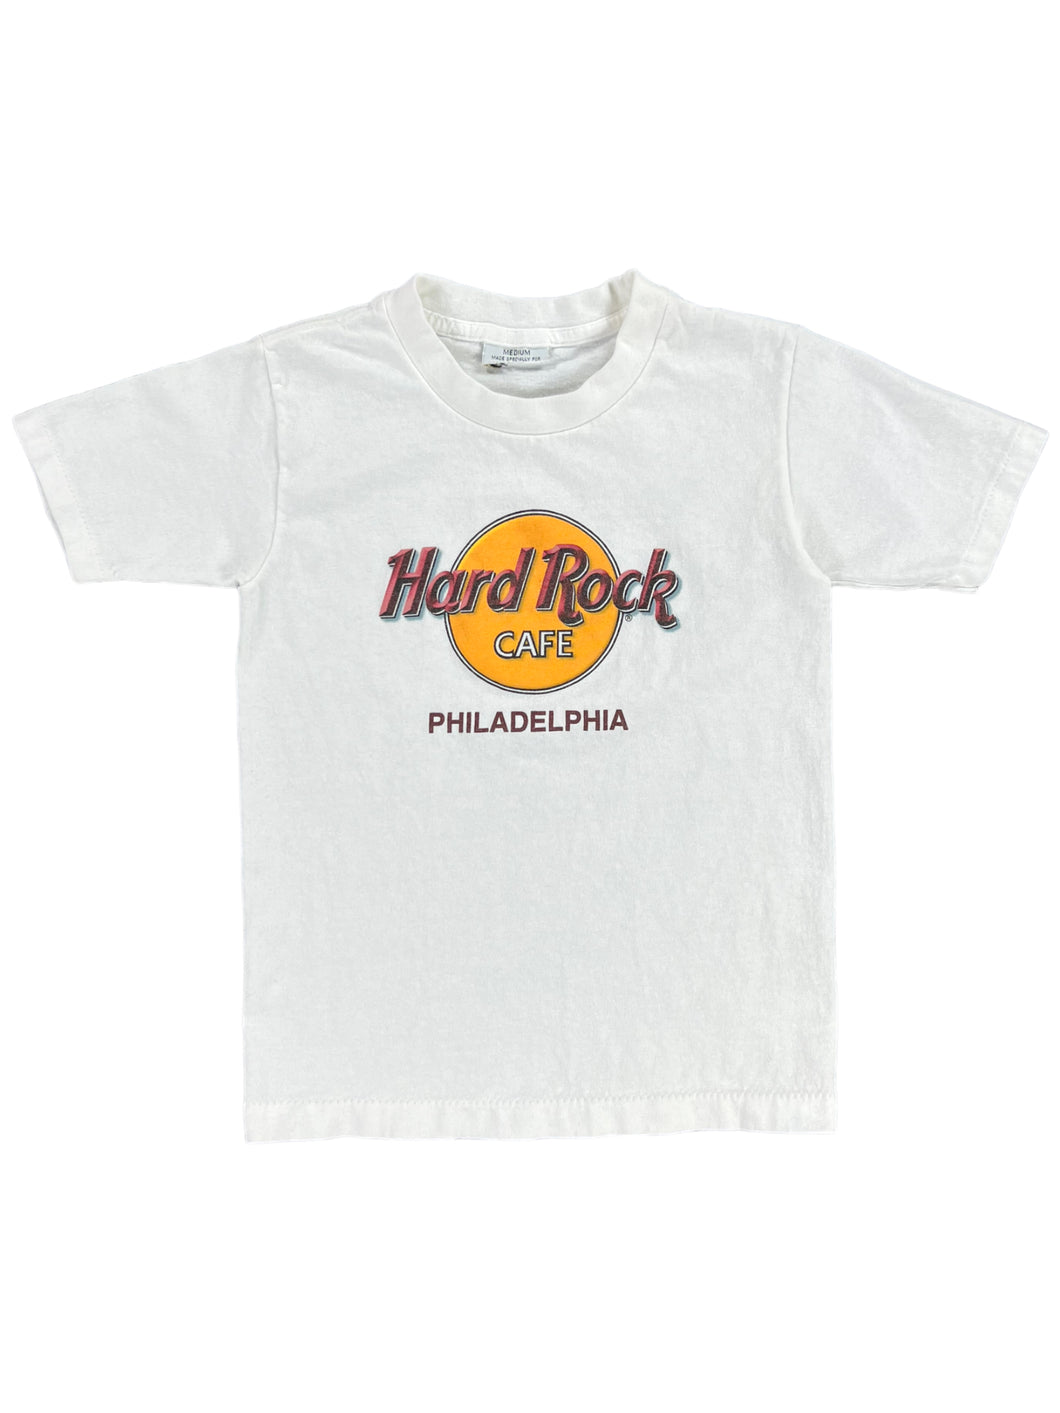 Vintage 90s Hard Rock Cafe Philadelphia baby style tee (S)